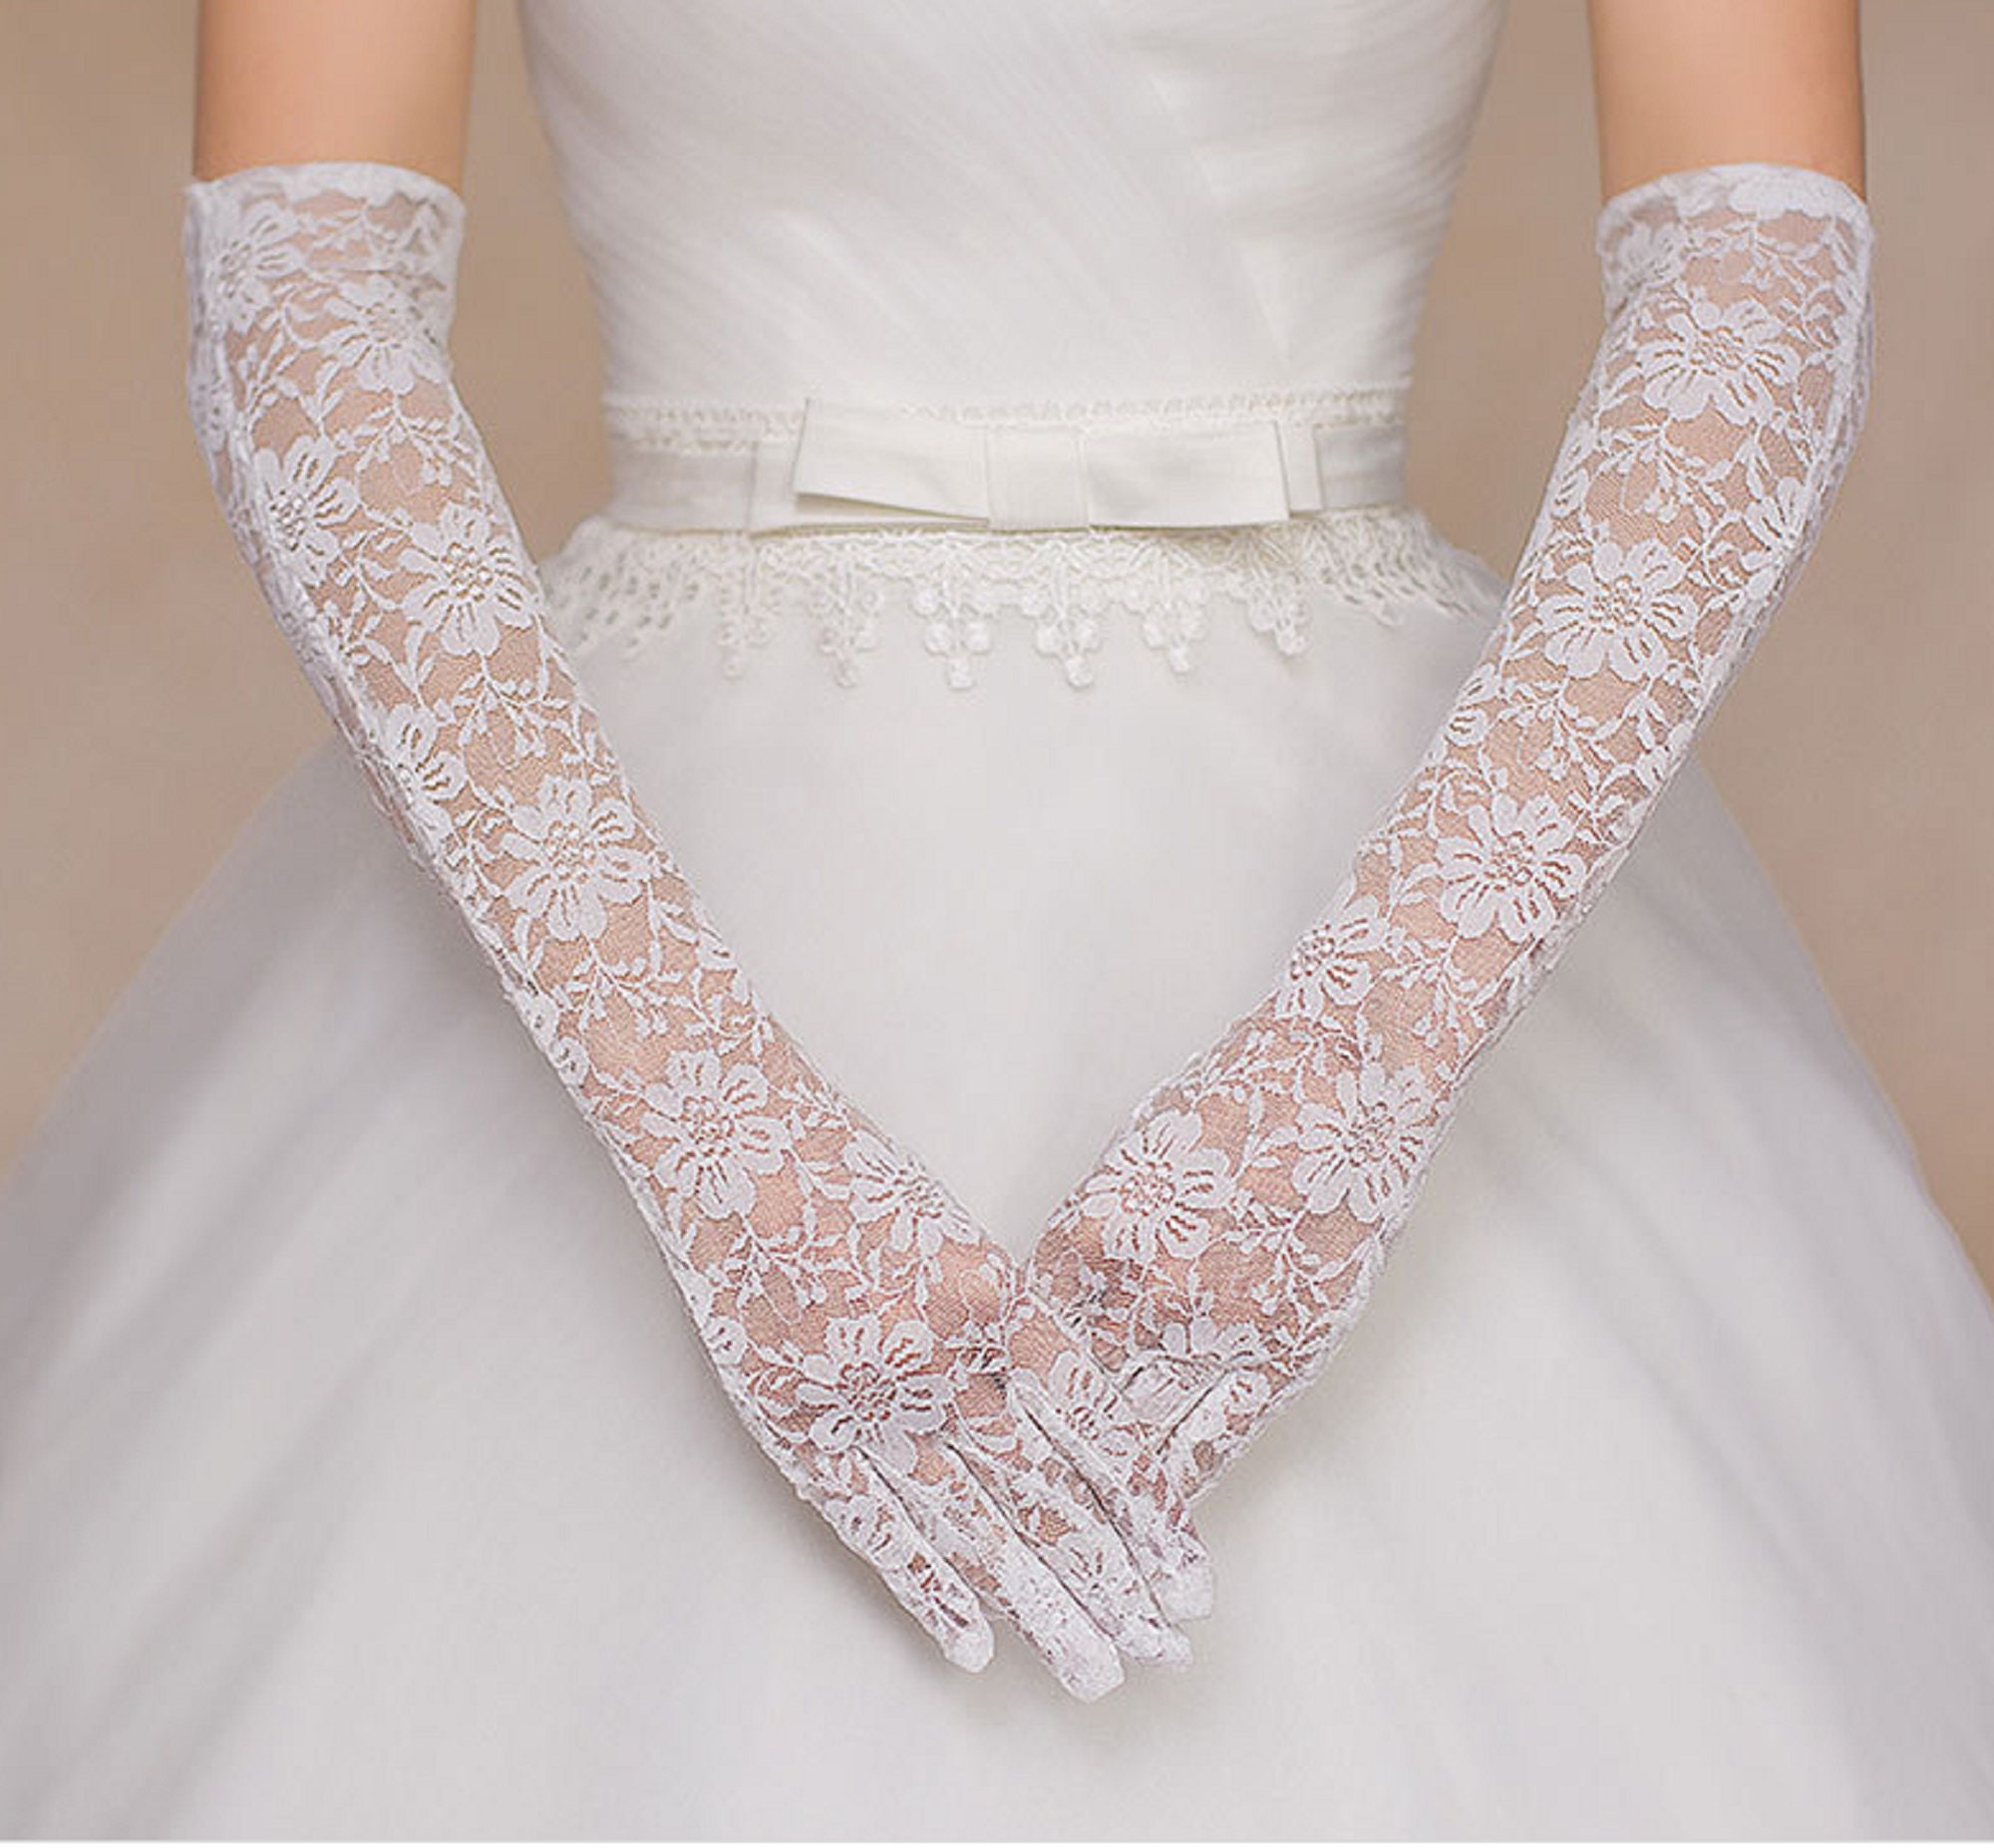 Vincenza Long Evening Gloves Satin Elbow Gloves Bridal Fancy Dress Gloves Wedding Prom Opera Gloves Style for Women UK STOCK 